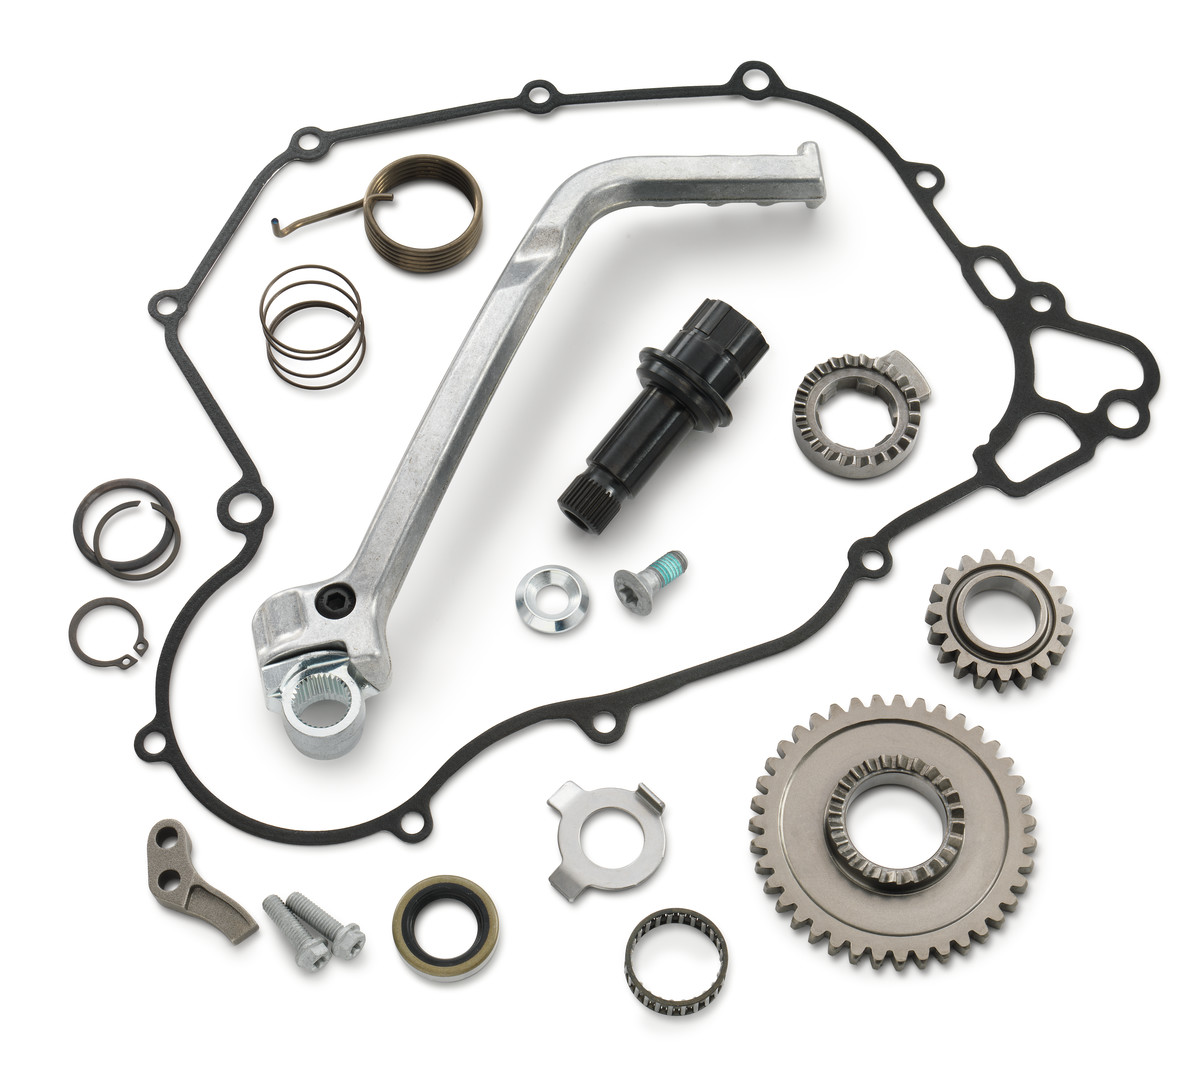 Main image of KTM/Husqvarna Kickstarter Kit 250/300 20-23